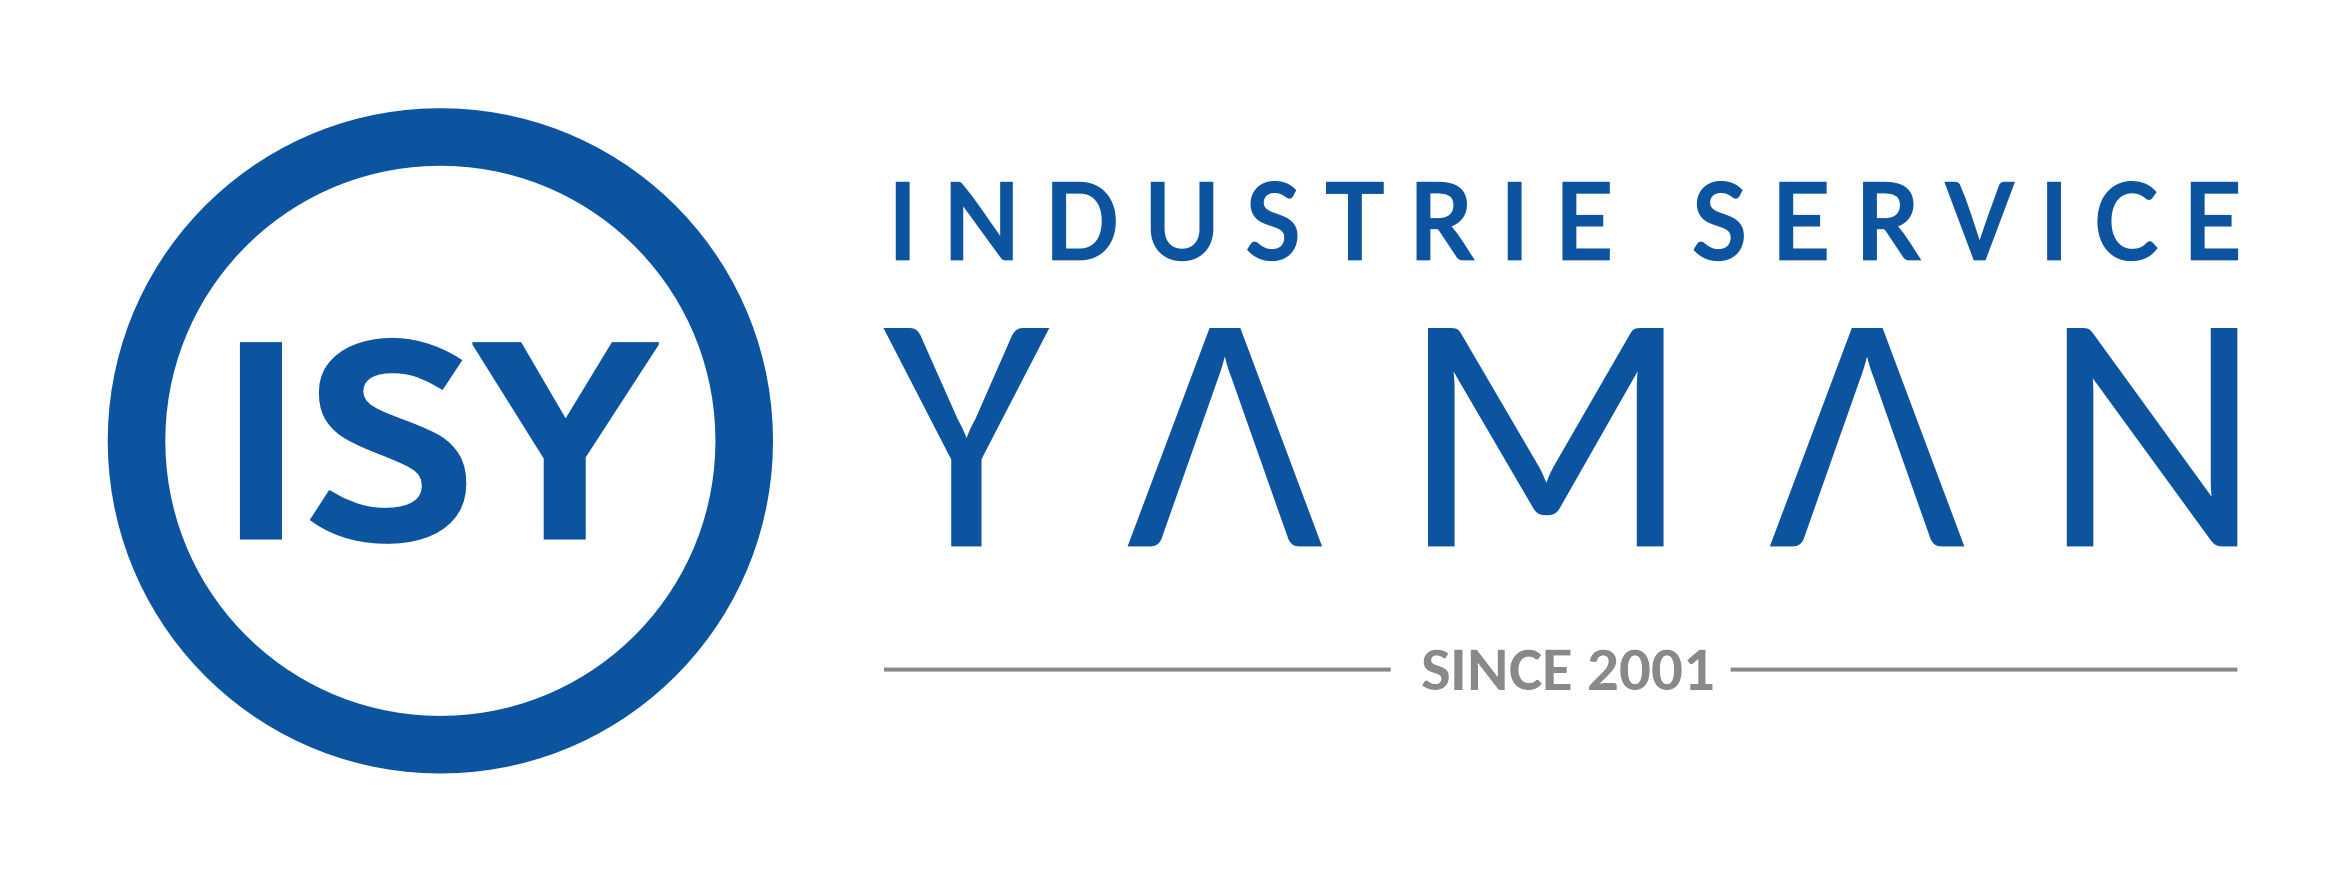 Industrie Service Yaman